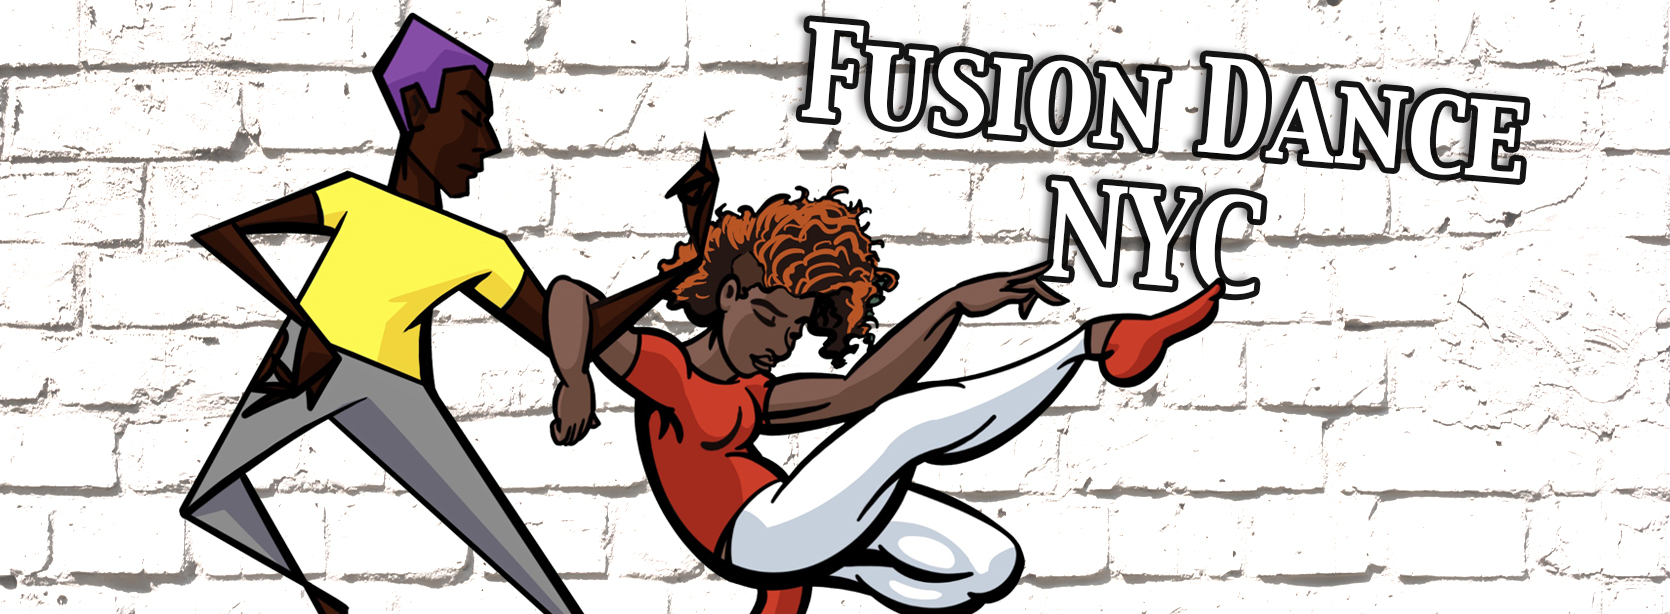 Fusion Dance NYC